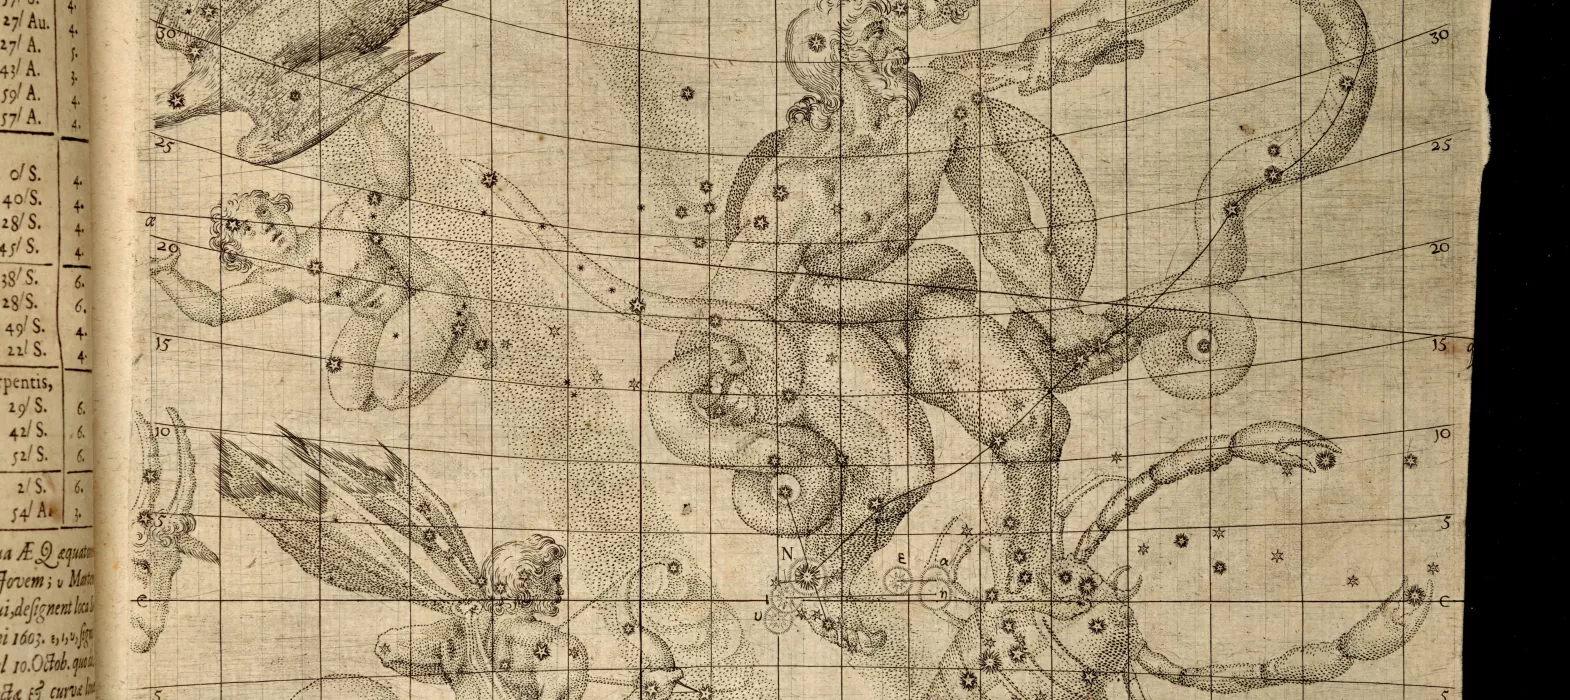 Johannes Kepler, De stella nova (1606), BT3.180.17(1)